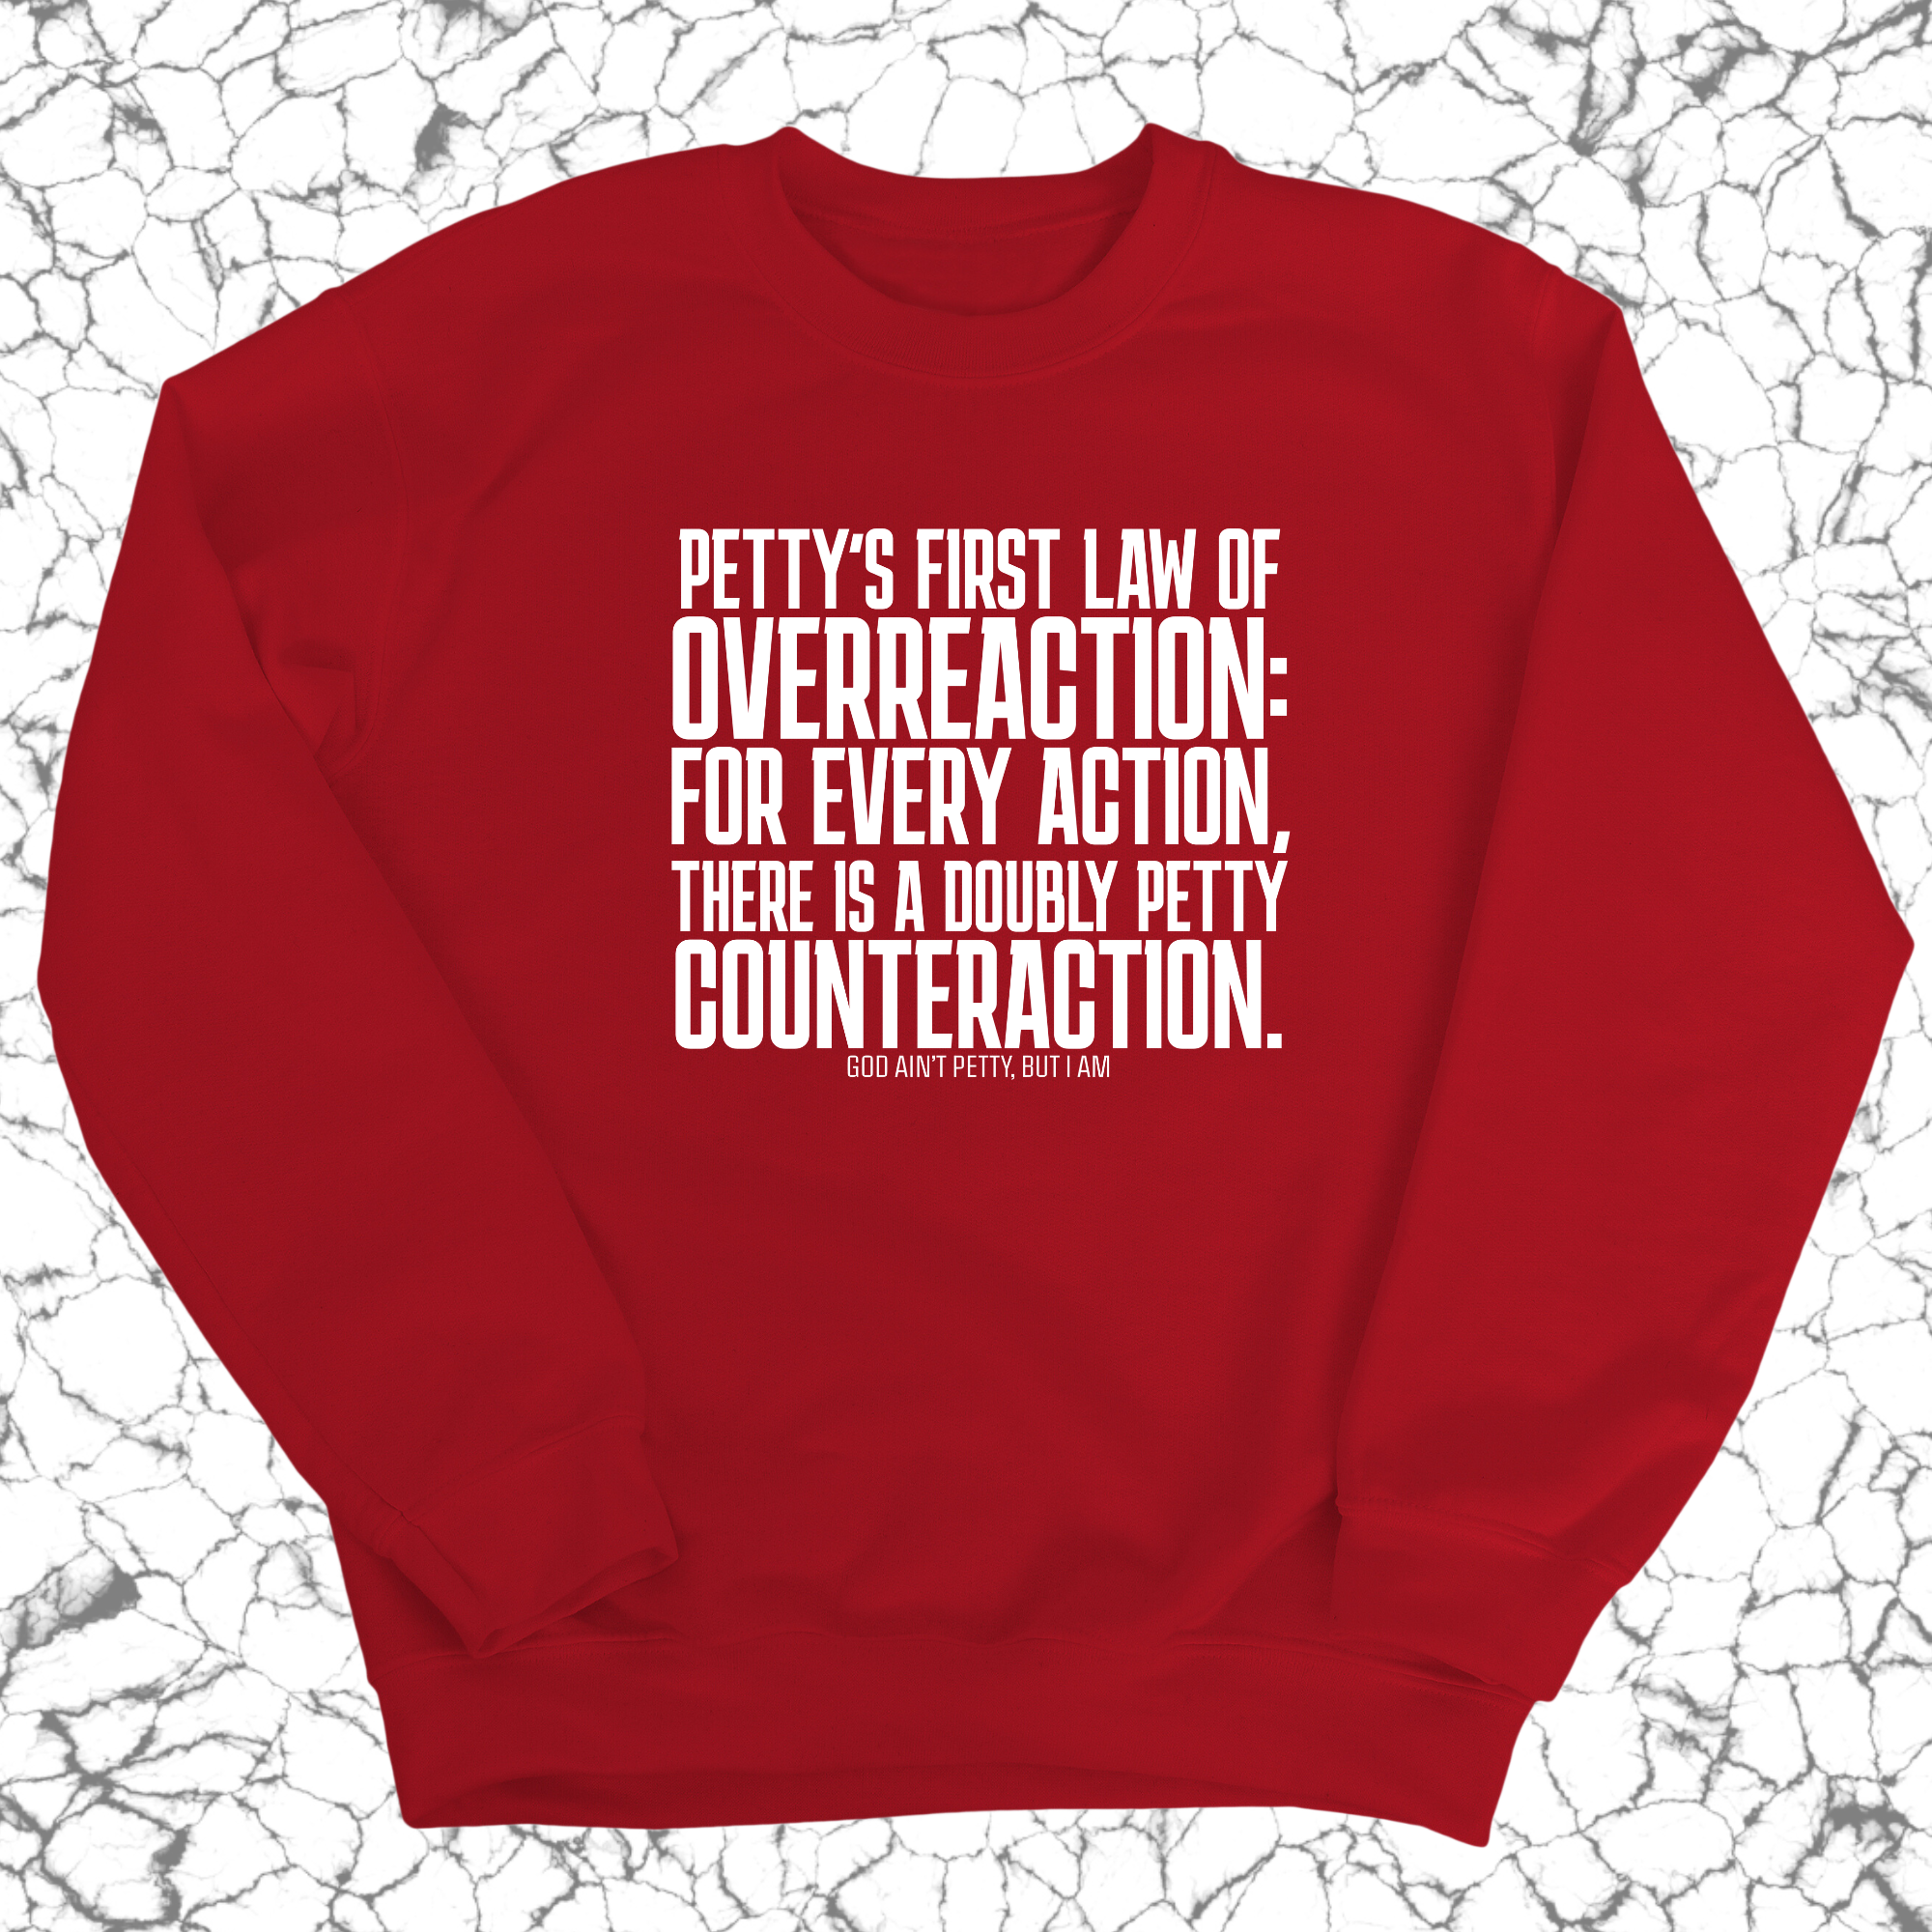 Petty's First Law of Overreaction Unisex Sweatshirt-Sweatshirt-The Original God Ain't Petty But I Am